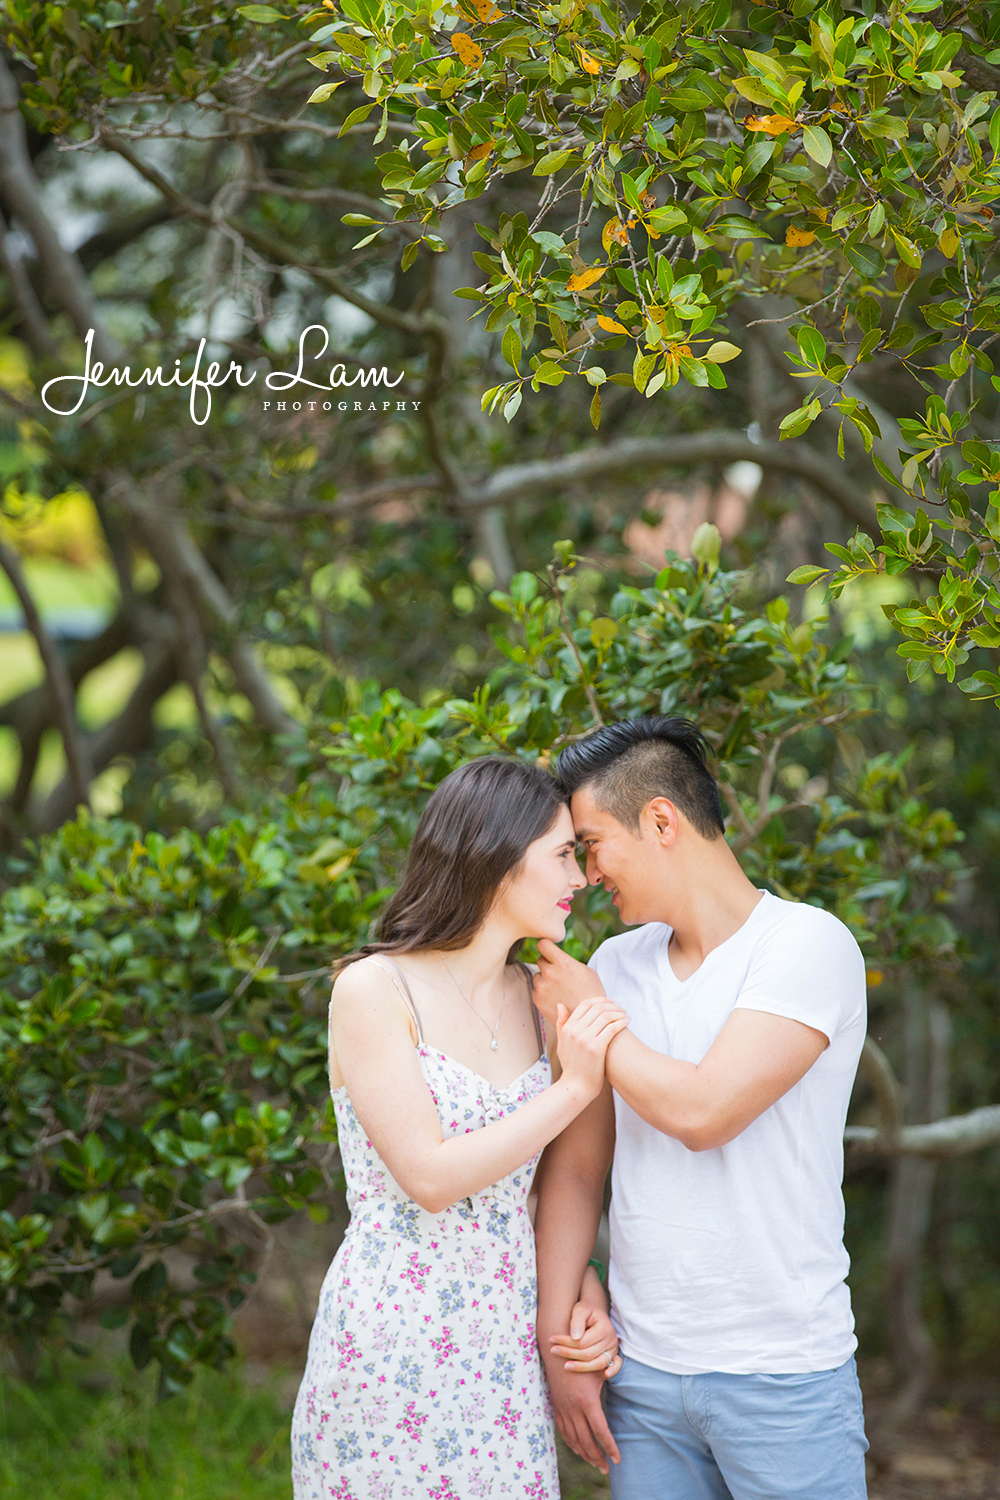 Sydney Pre-Wedding Photography - Jennifer Lam Photography (19).jpg